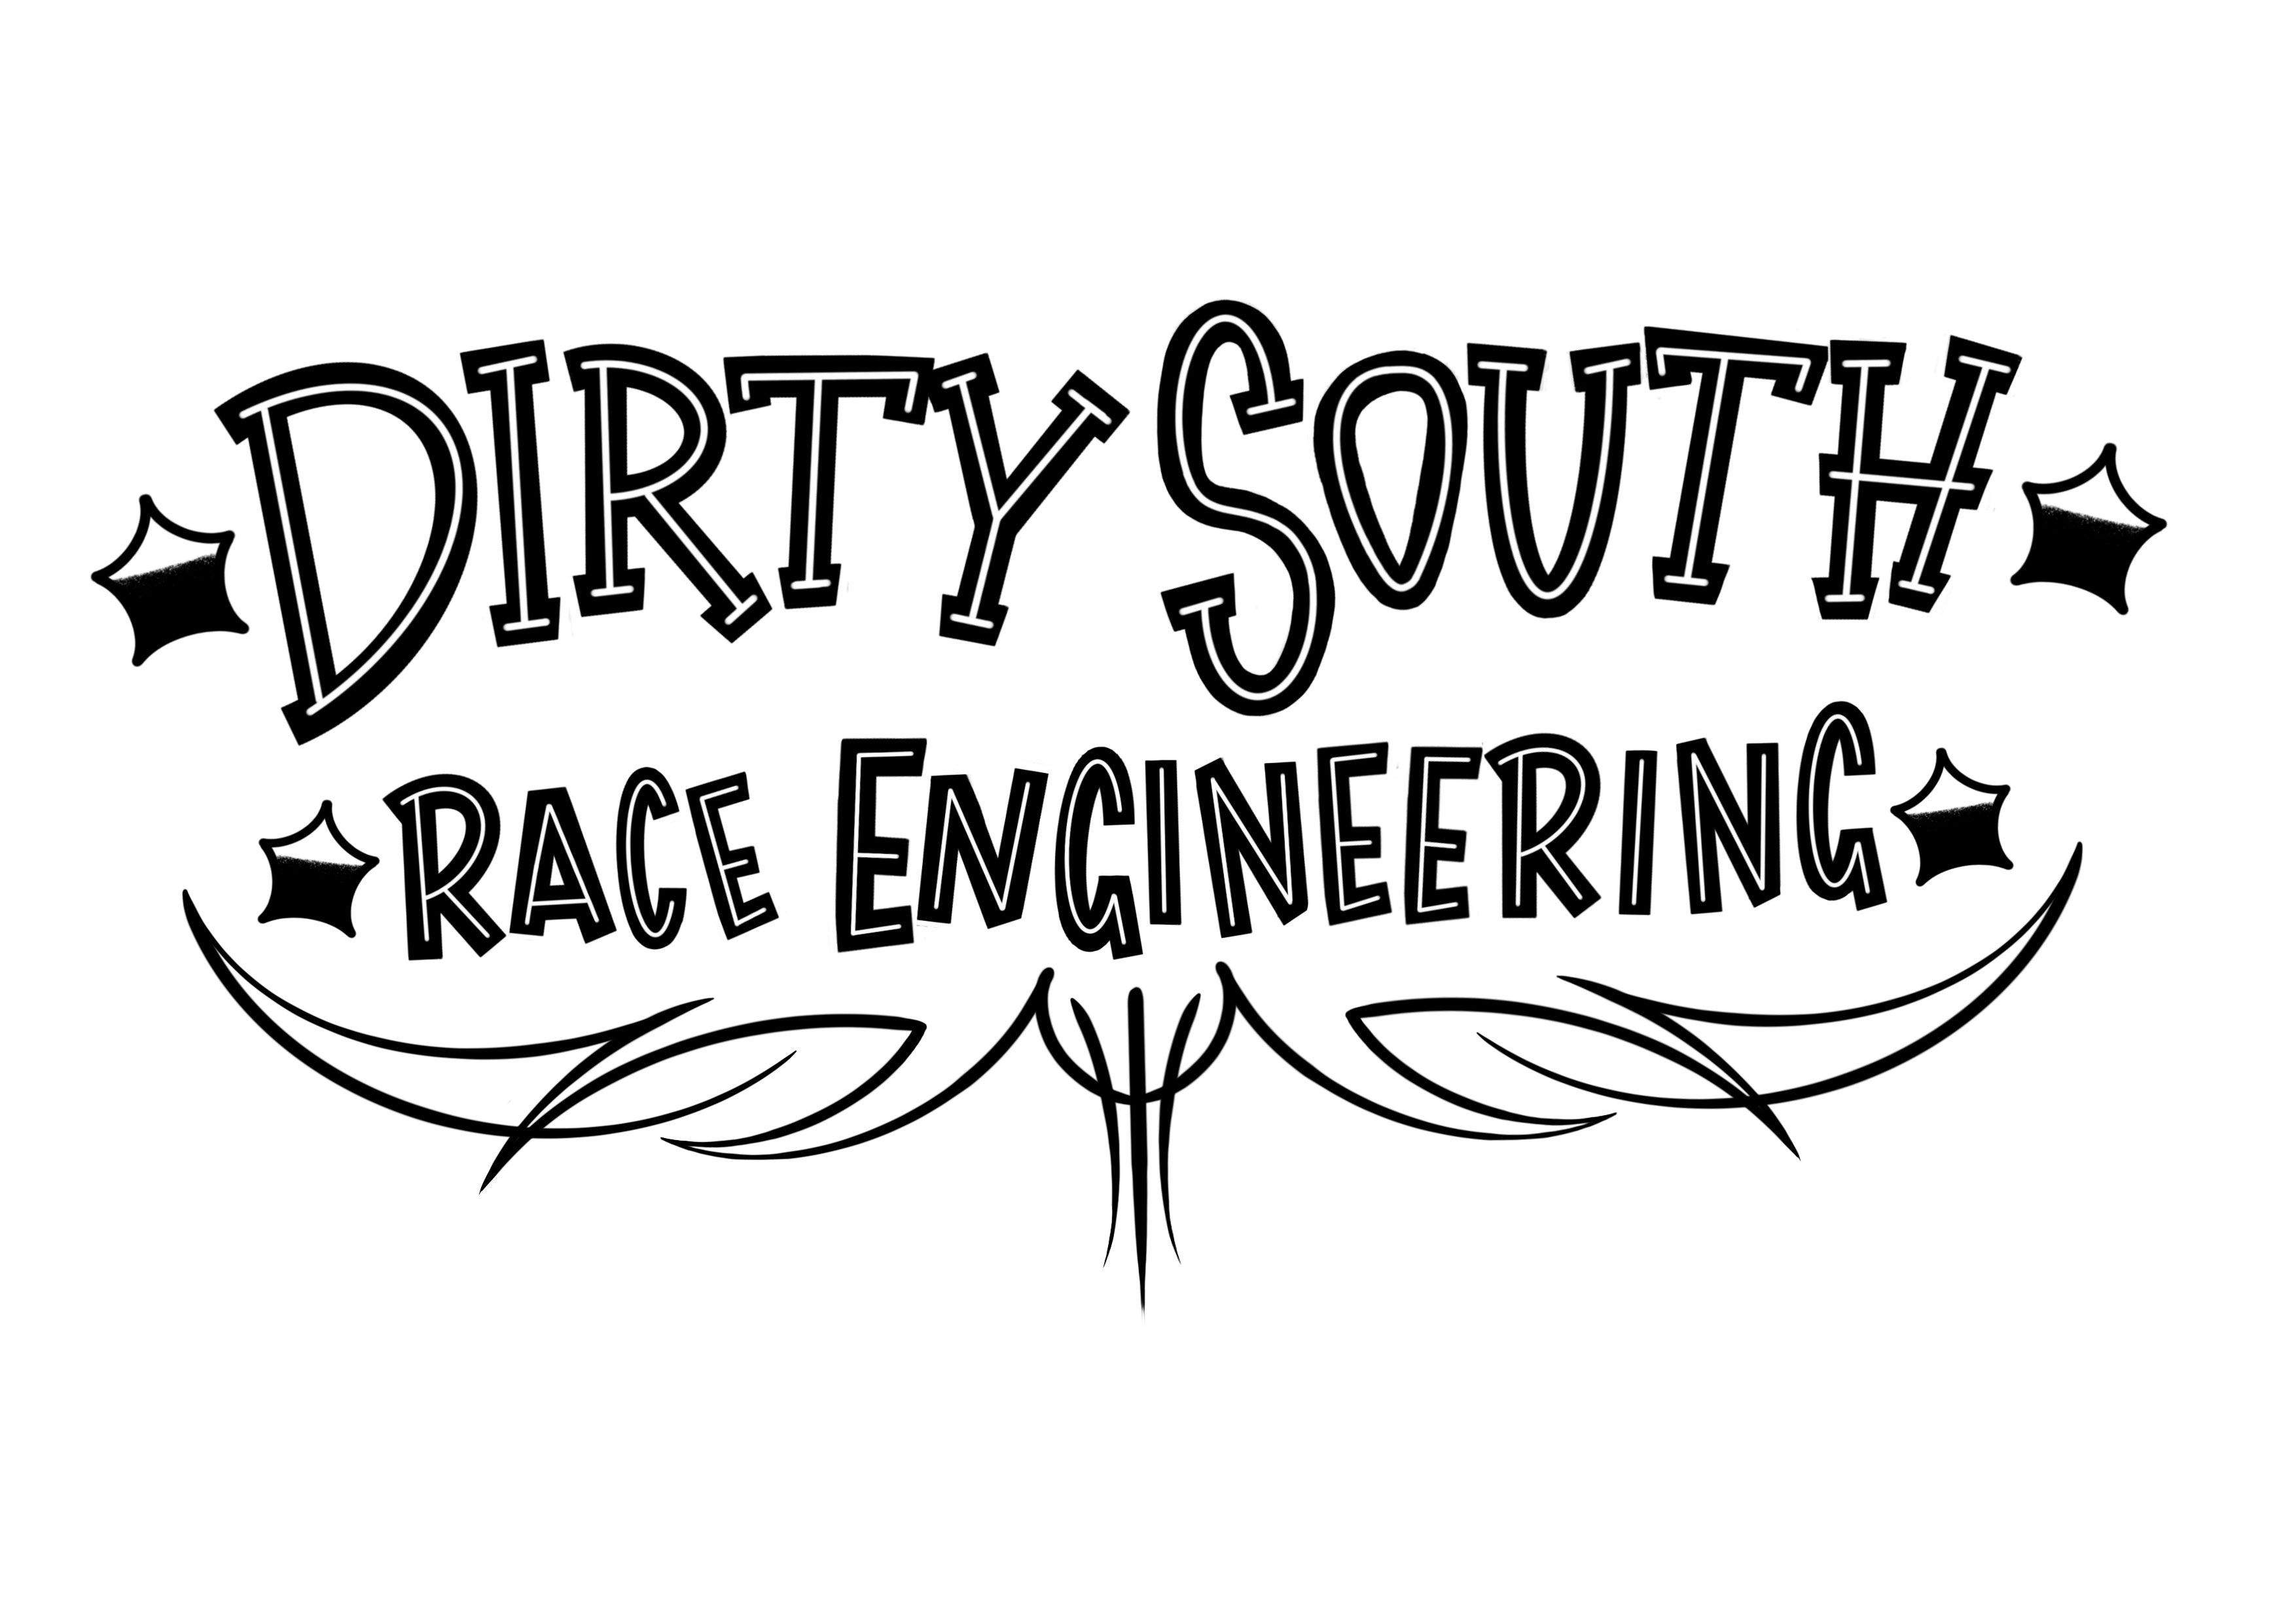 dirty south logo